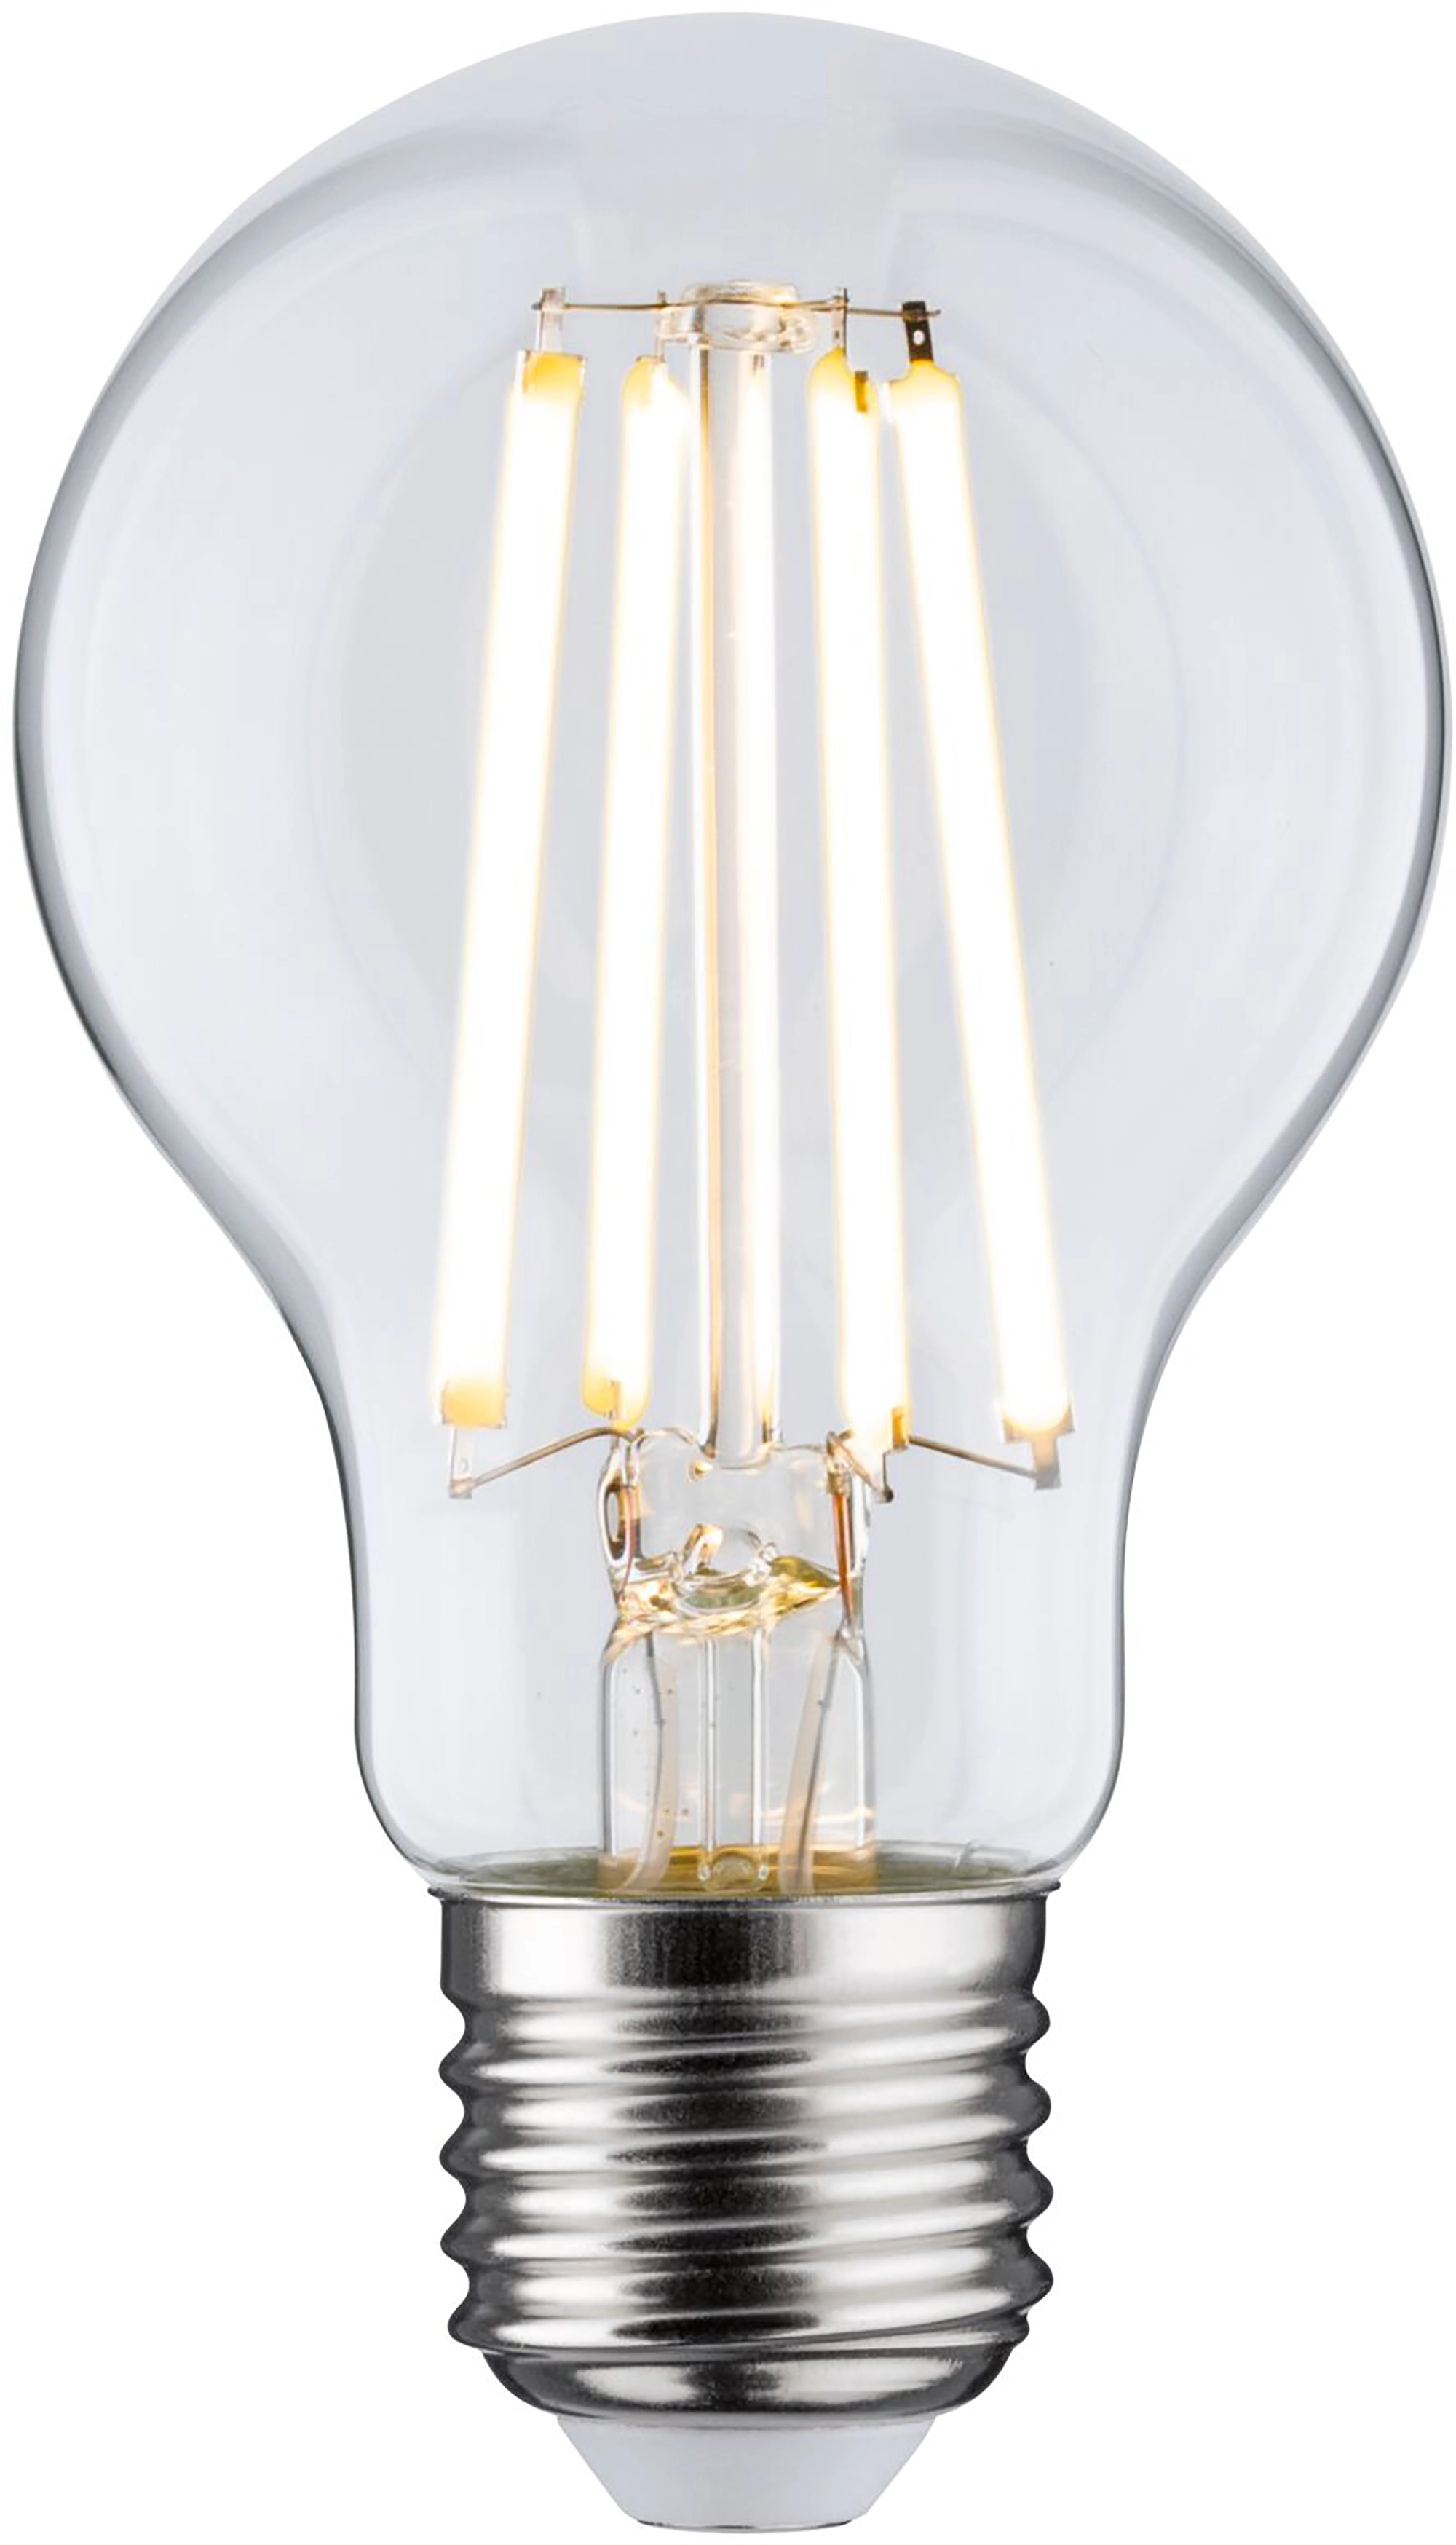 Paulmann Eco-Line K lm 4 LED bei Leuchtmittel Birne kaufen 3000 E27 W 840 Filament OBI Klar